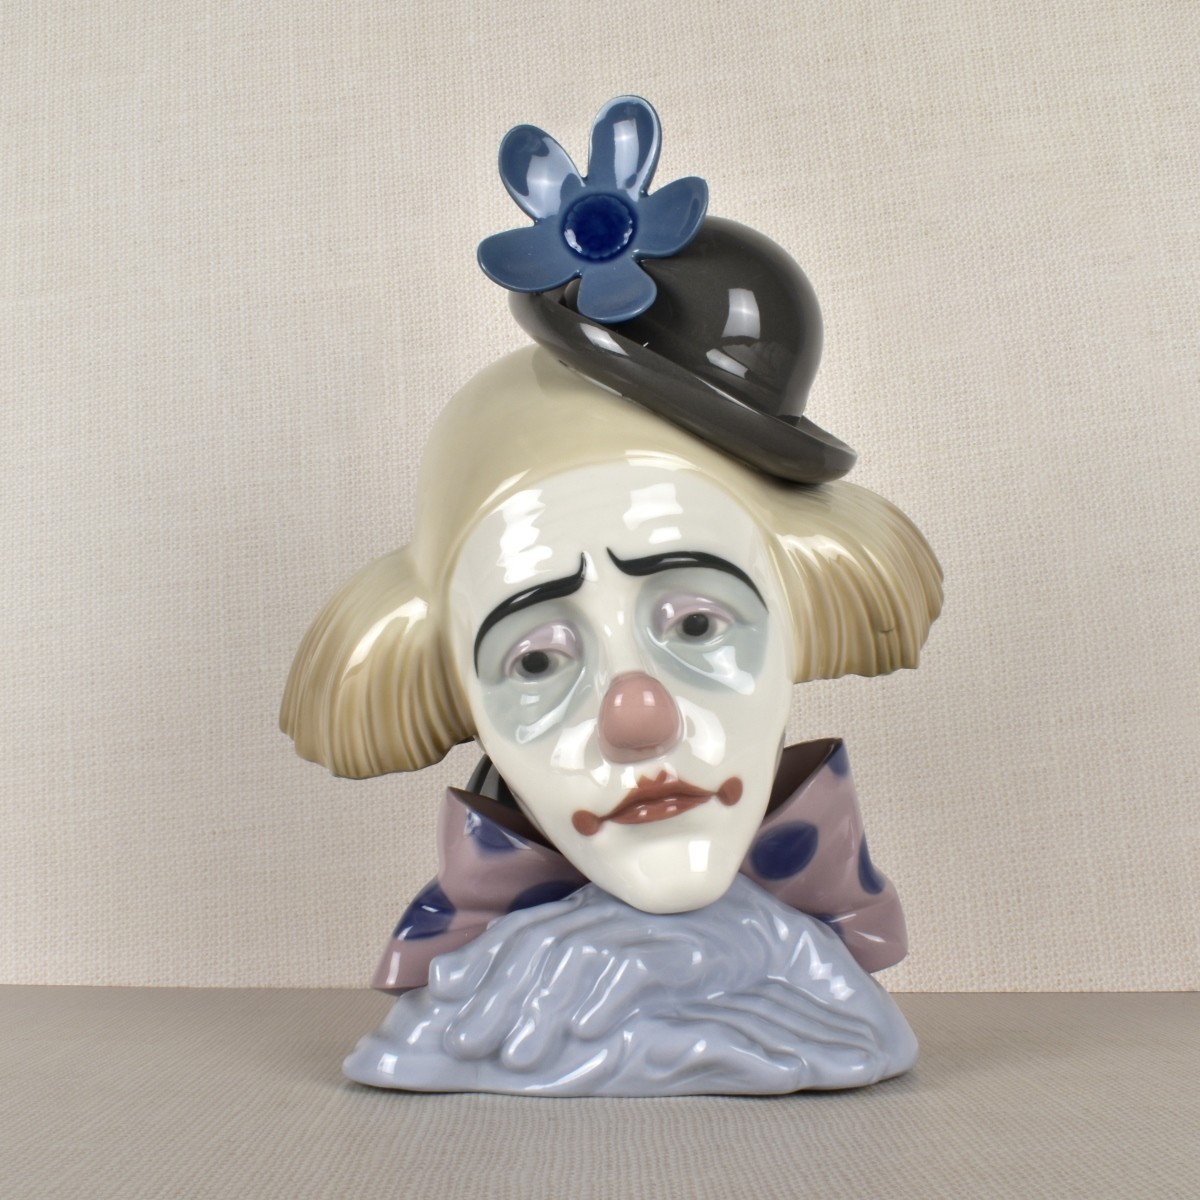 Lladro Figurine of a Sad Clown